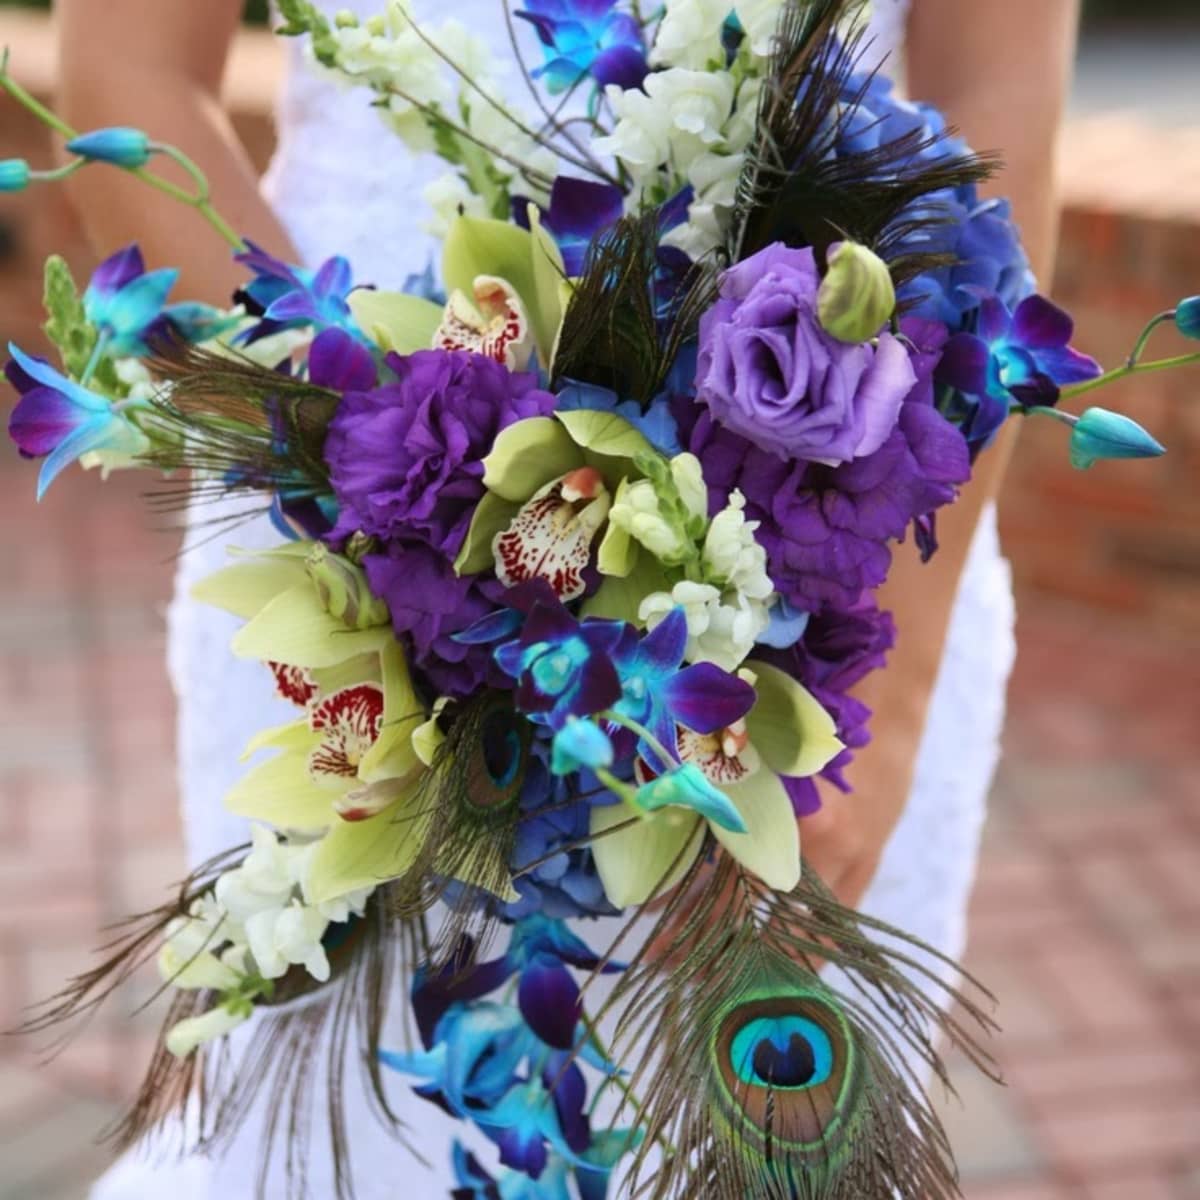 25 Colorful Wedding Veils For A Bright Touch - Weddingomania